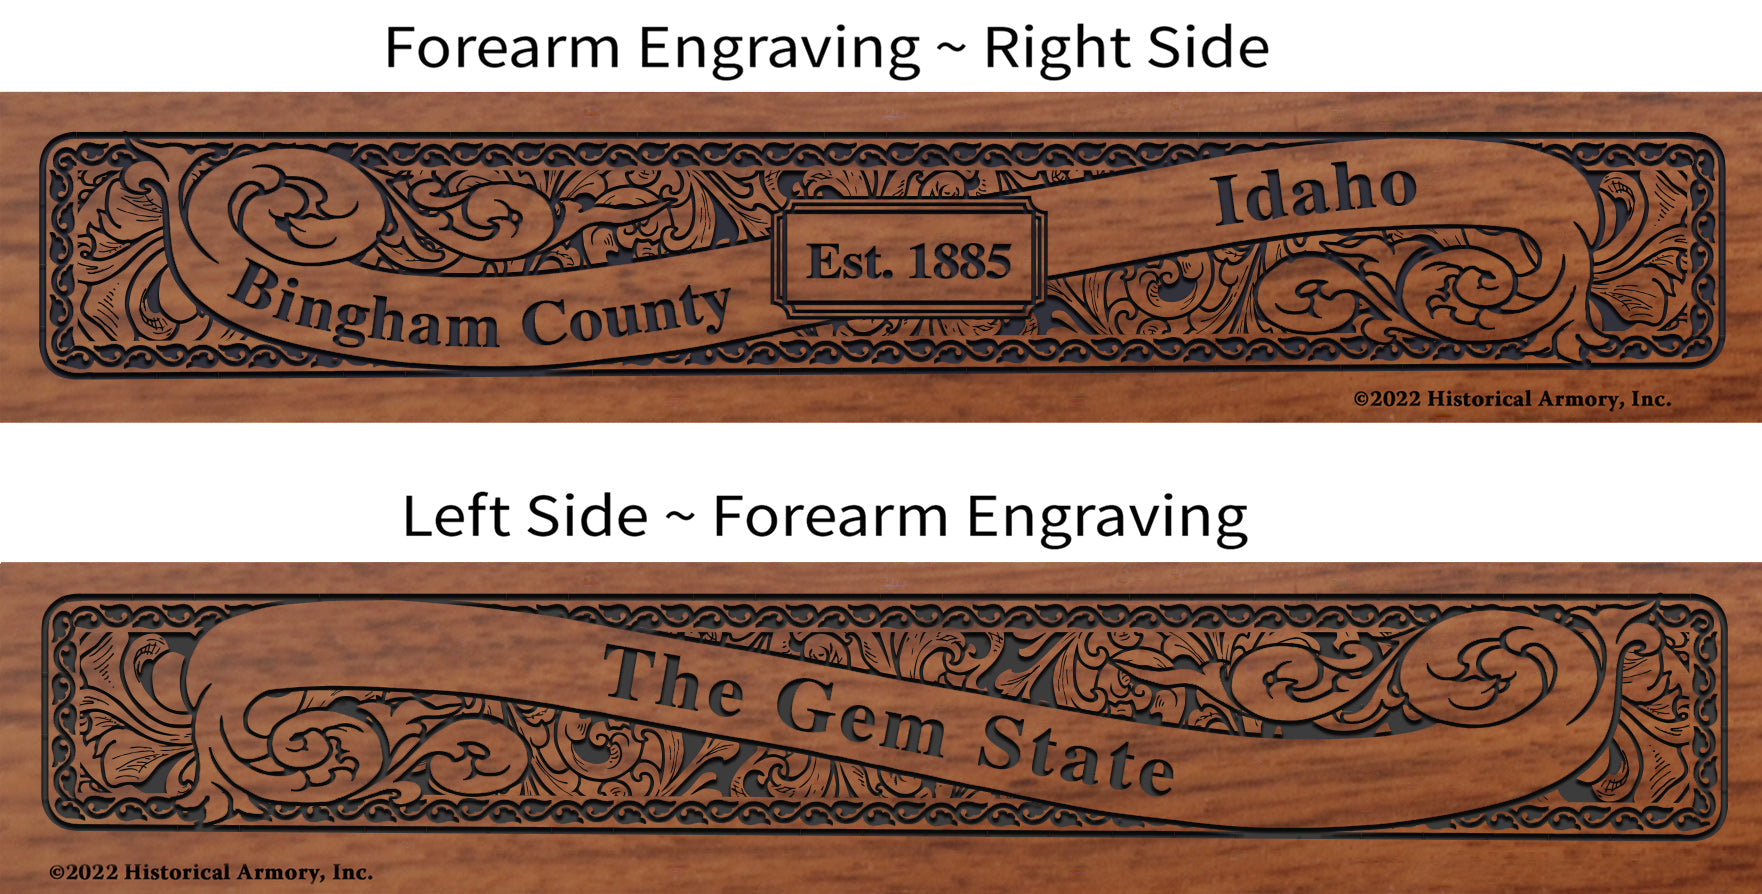 Bingham County Idaho Engraved Rifle Forearm